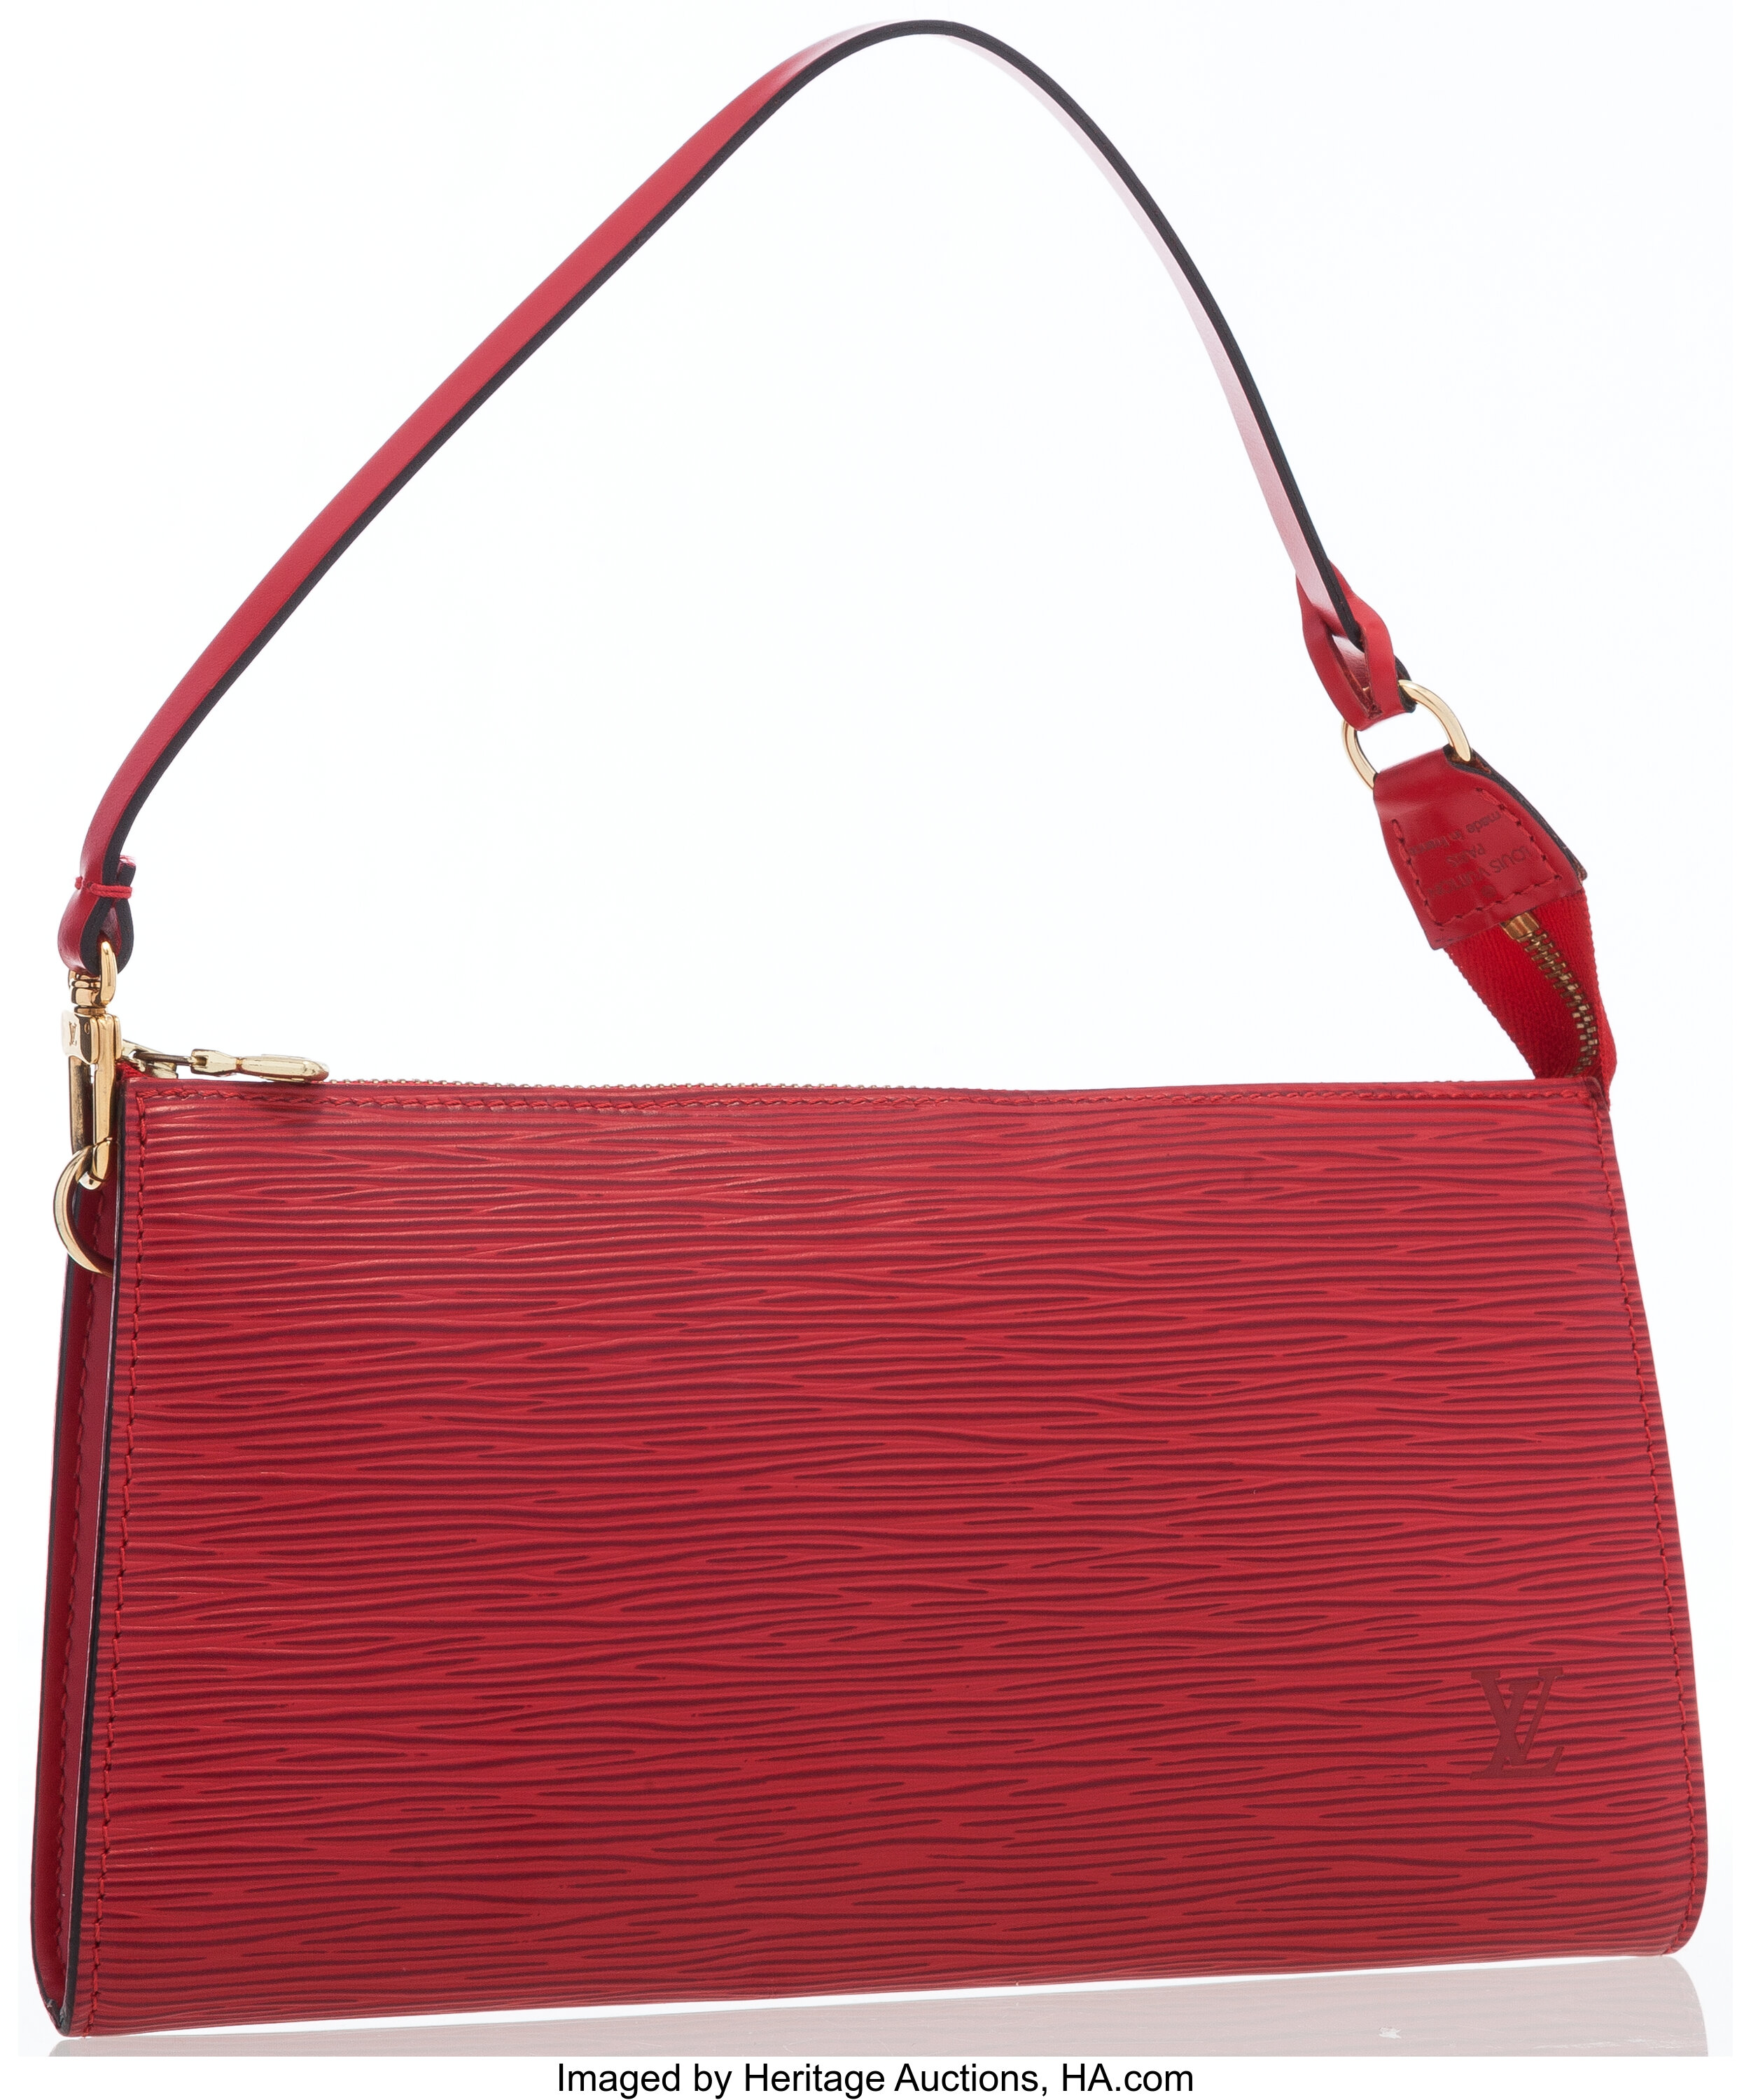 Louis Vuitton Red Bags & Handbags for Women